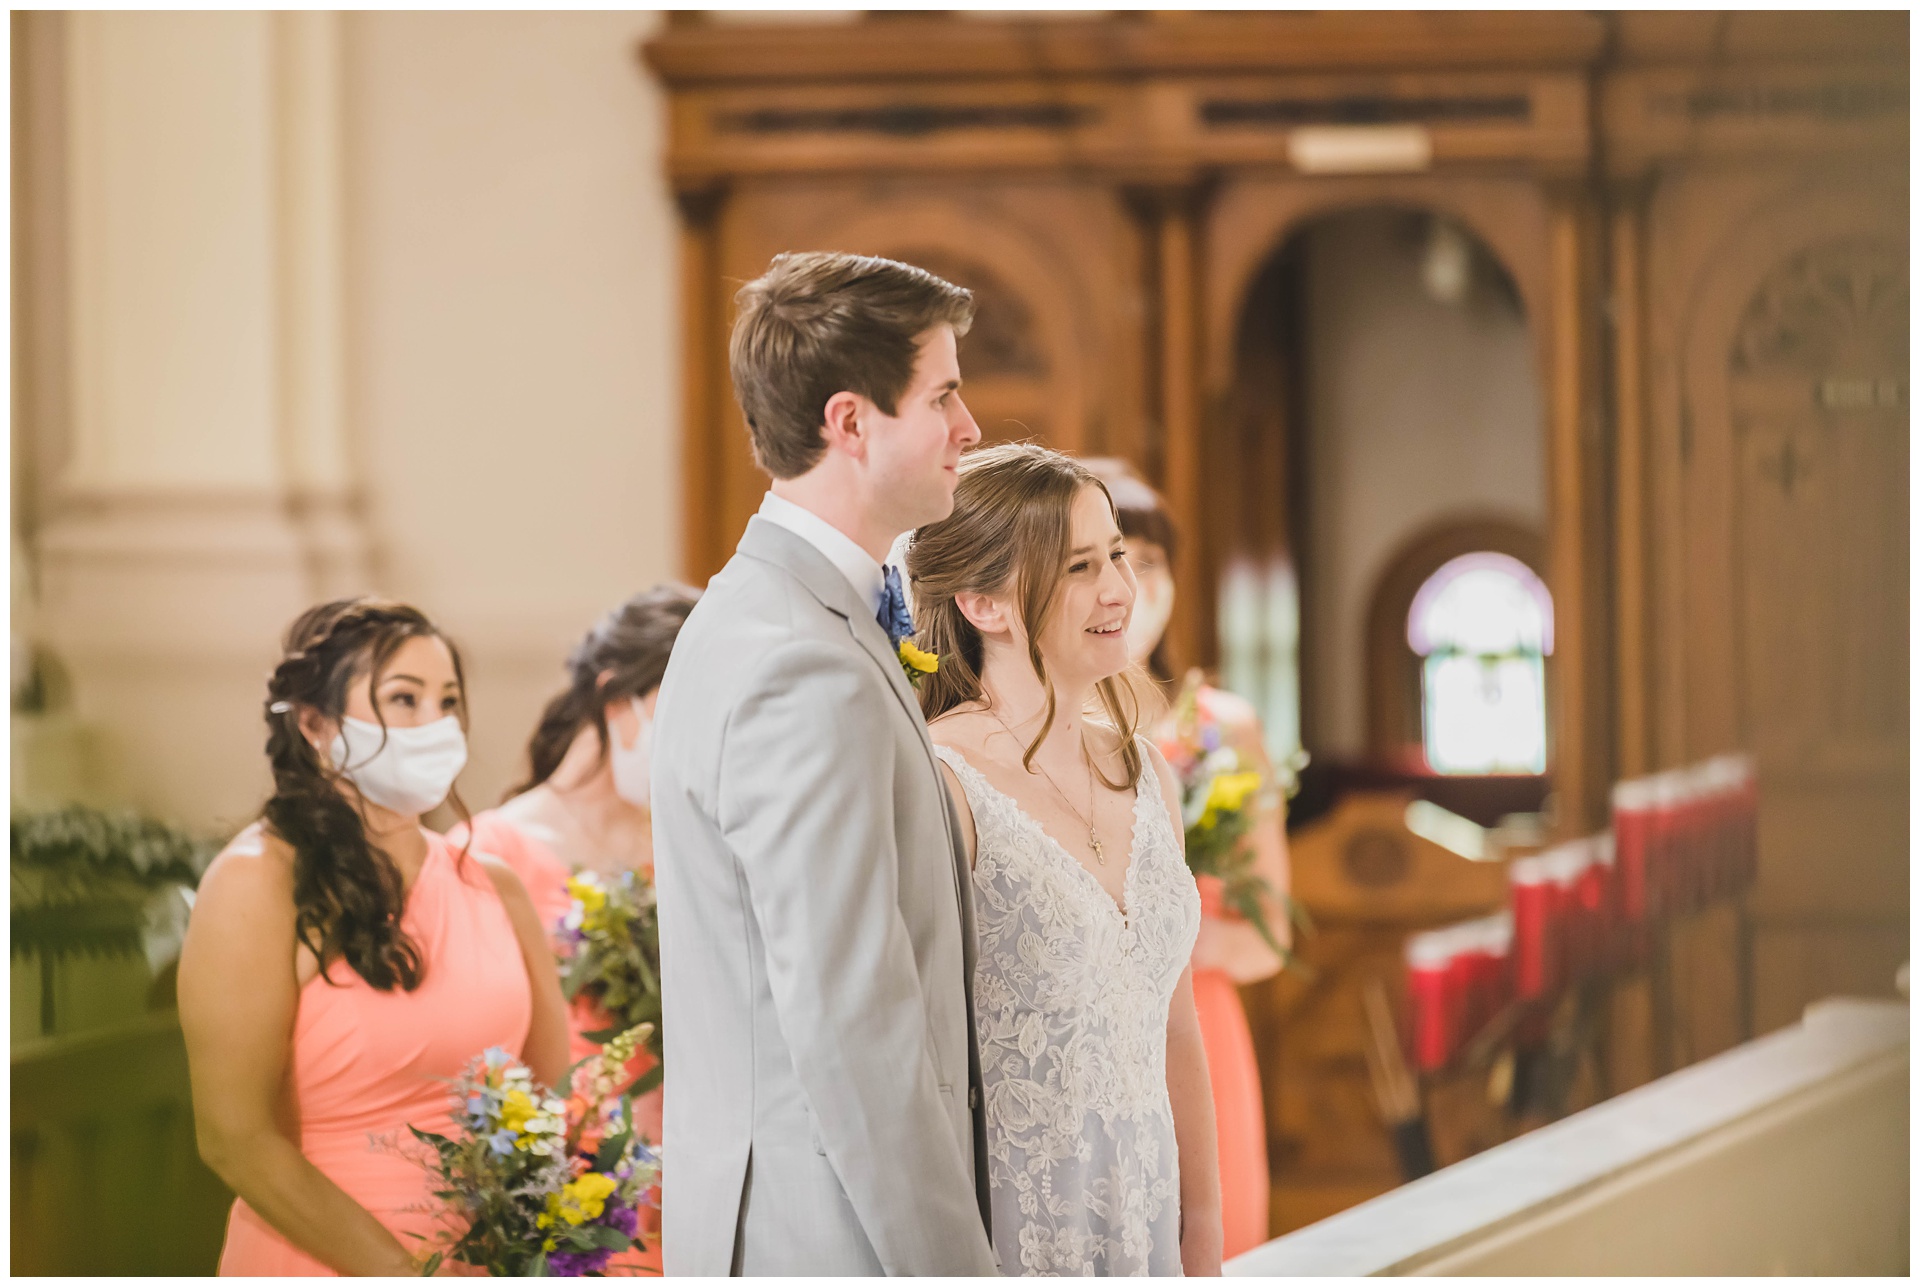 Wedding photography at Our Lady of Sorrows Catholic Church by Kansas City wedding photographers Wisdom-Watson Weddings.